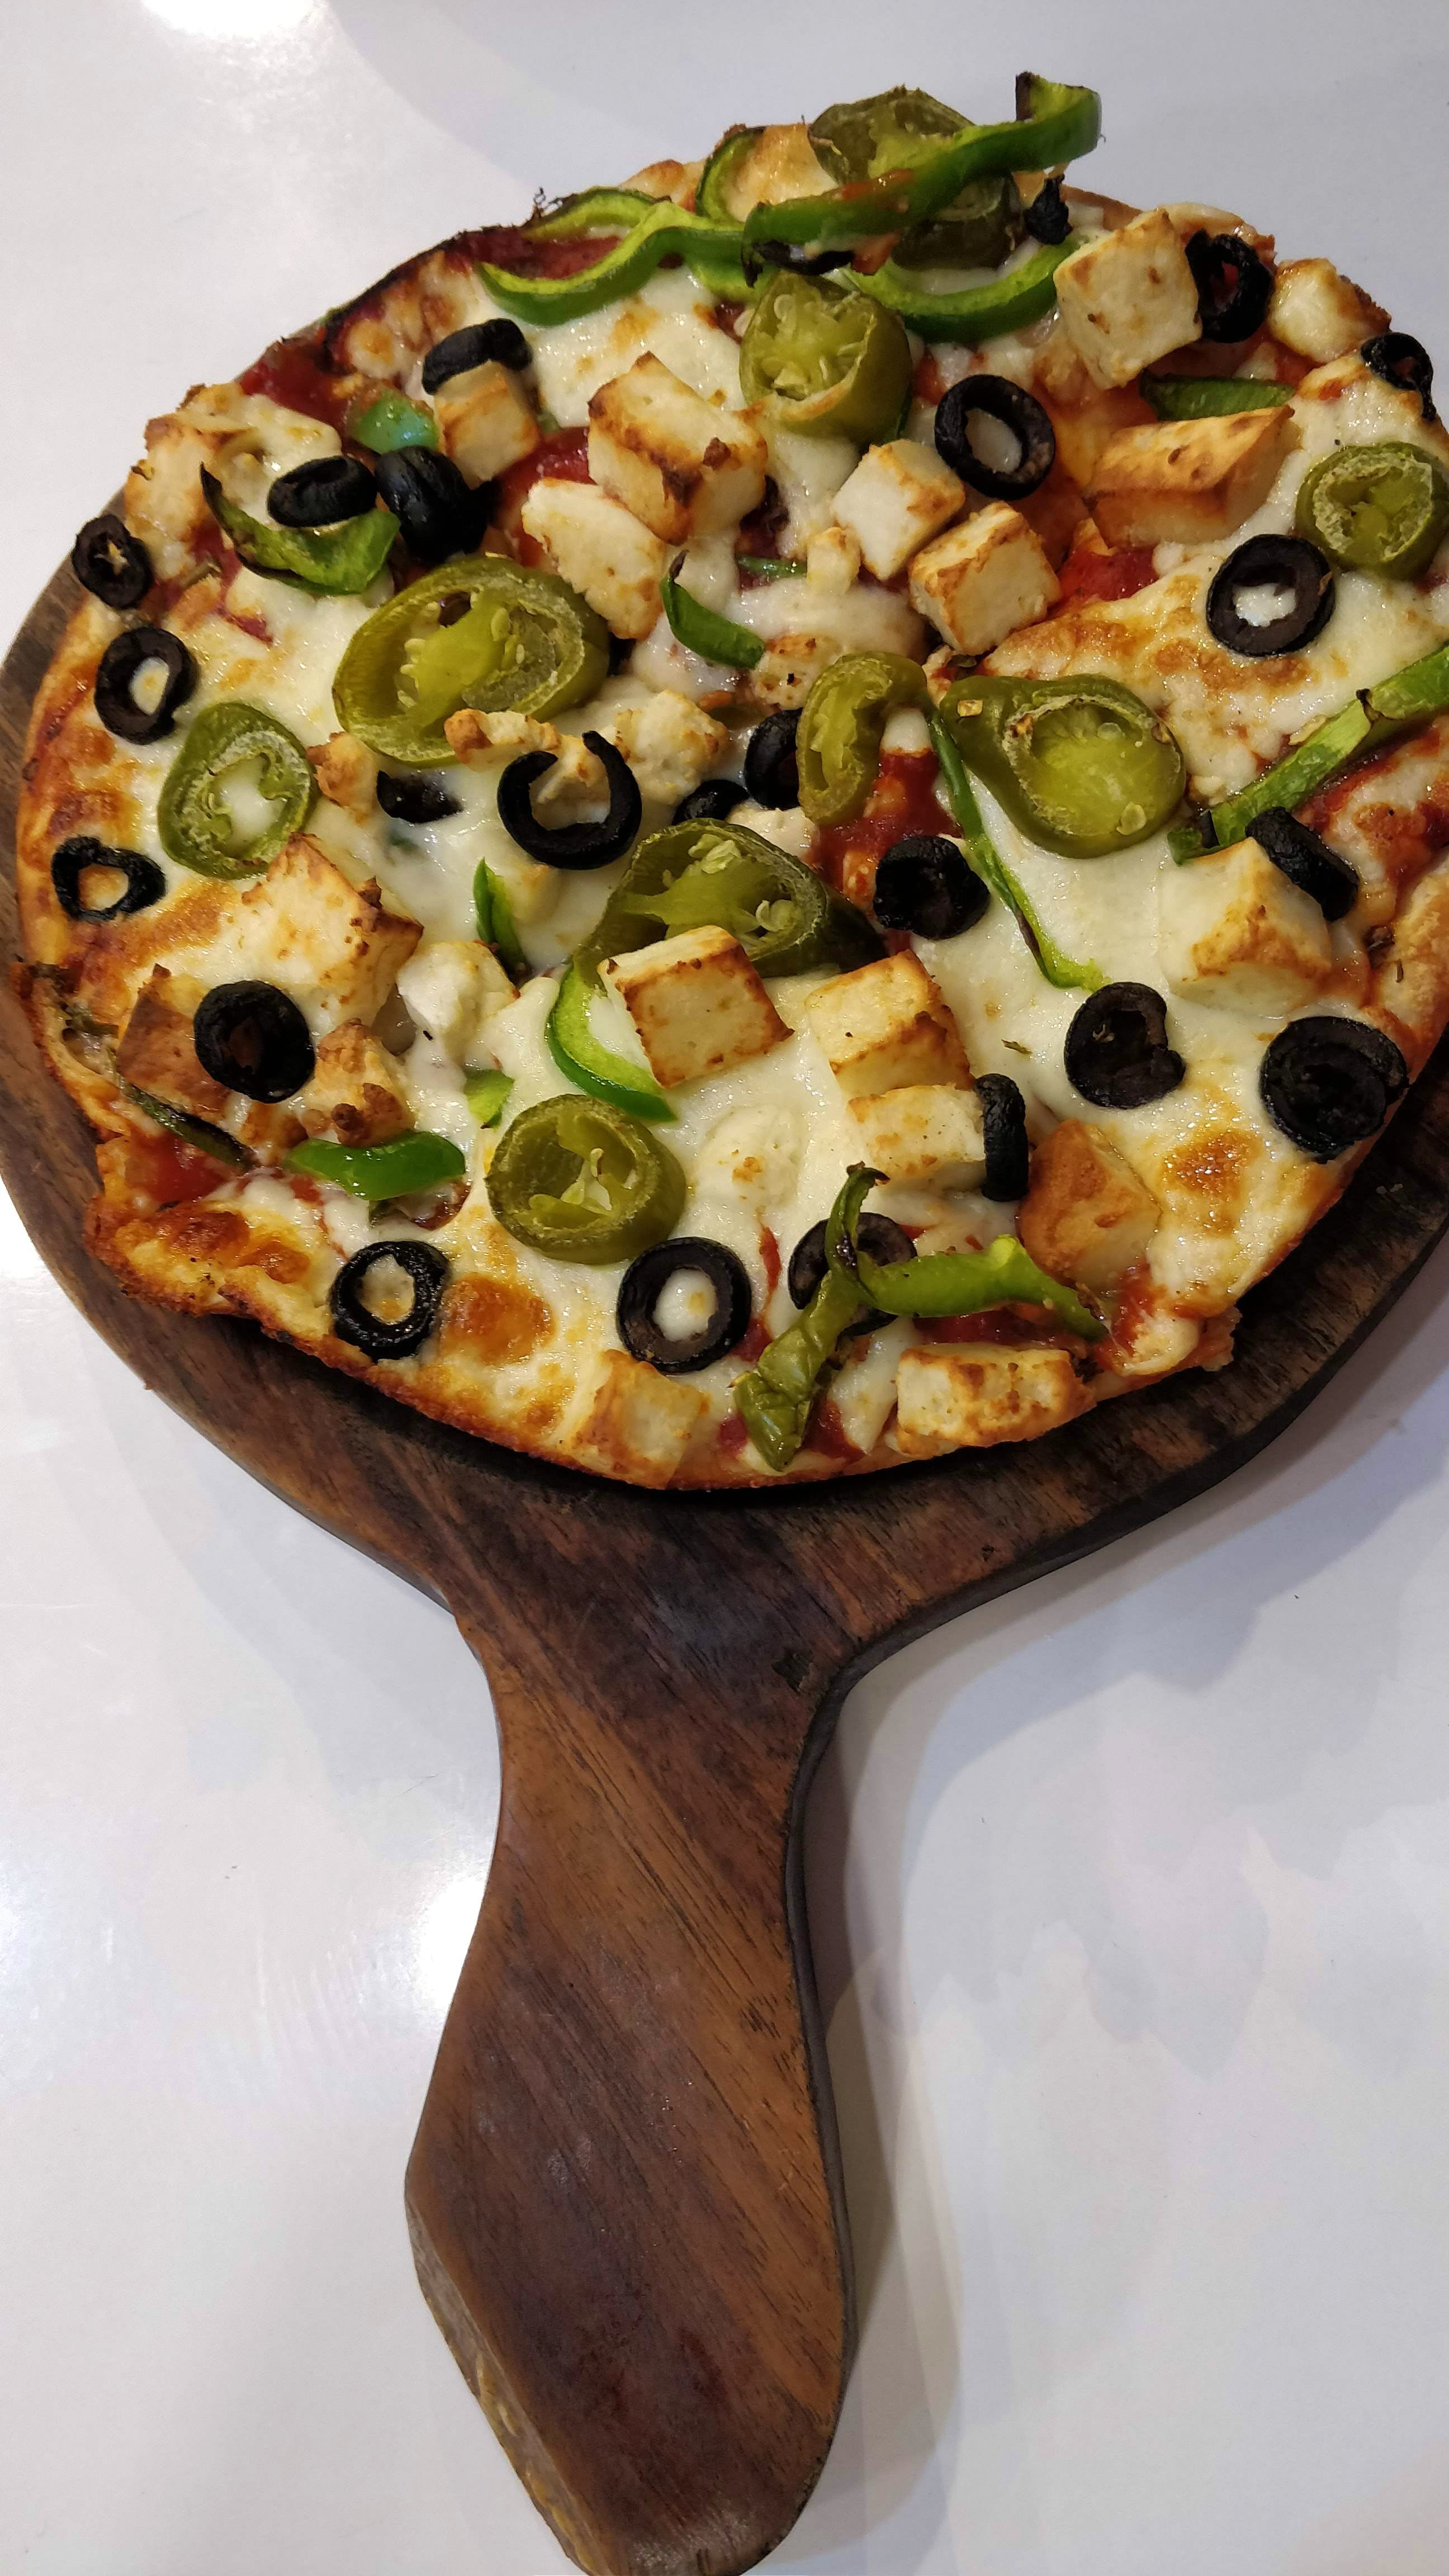 Dish,Pizza,Food,Cuisine,Pizza cheese,Ingredient,Recipe,Comfort food,Italian food,Flatbread